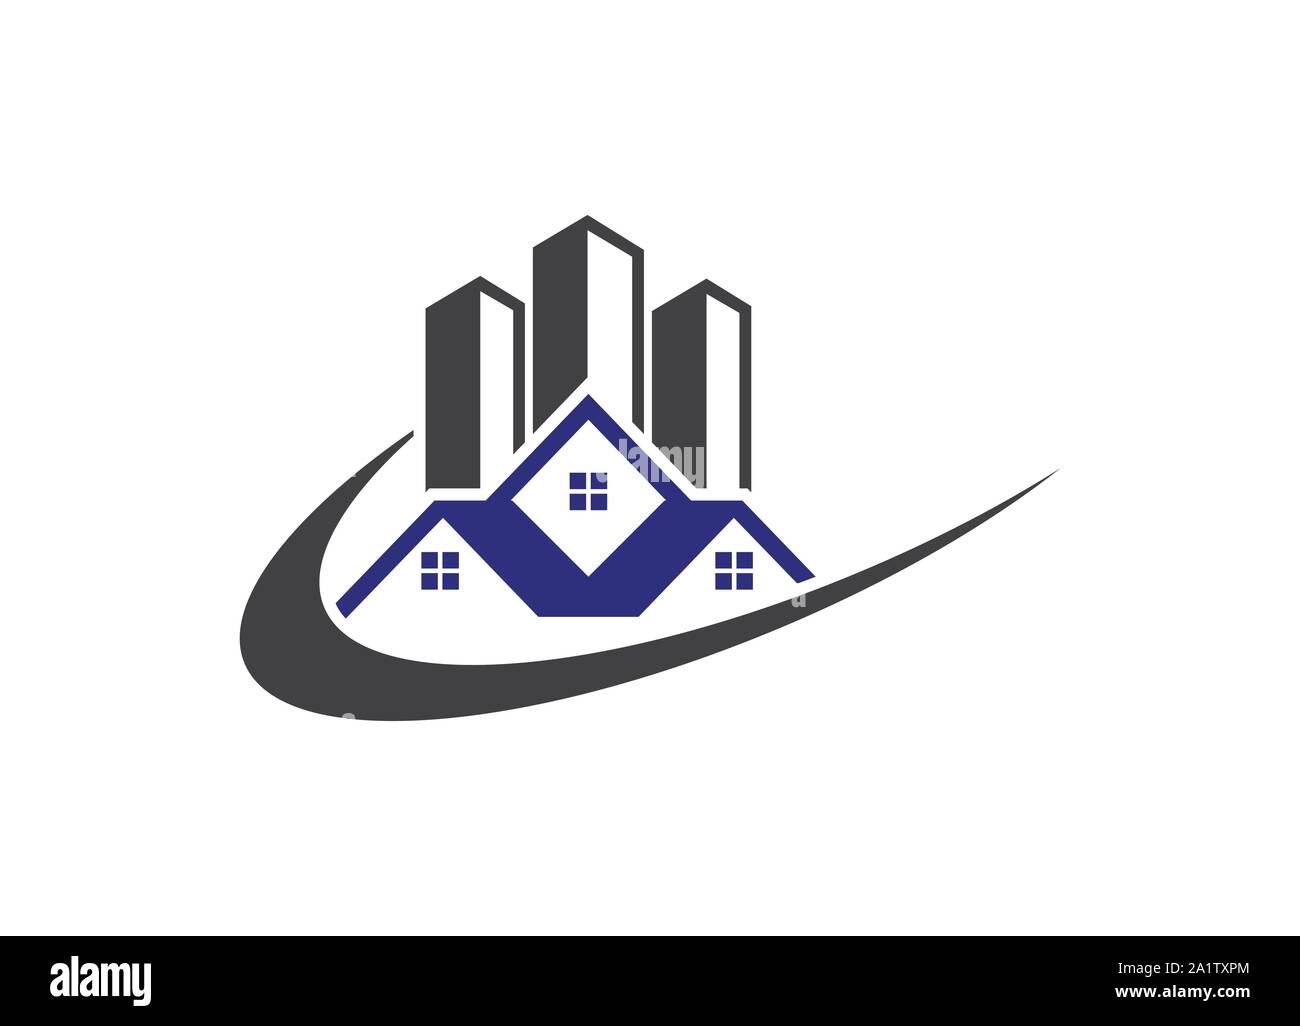 building construction logo design